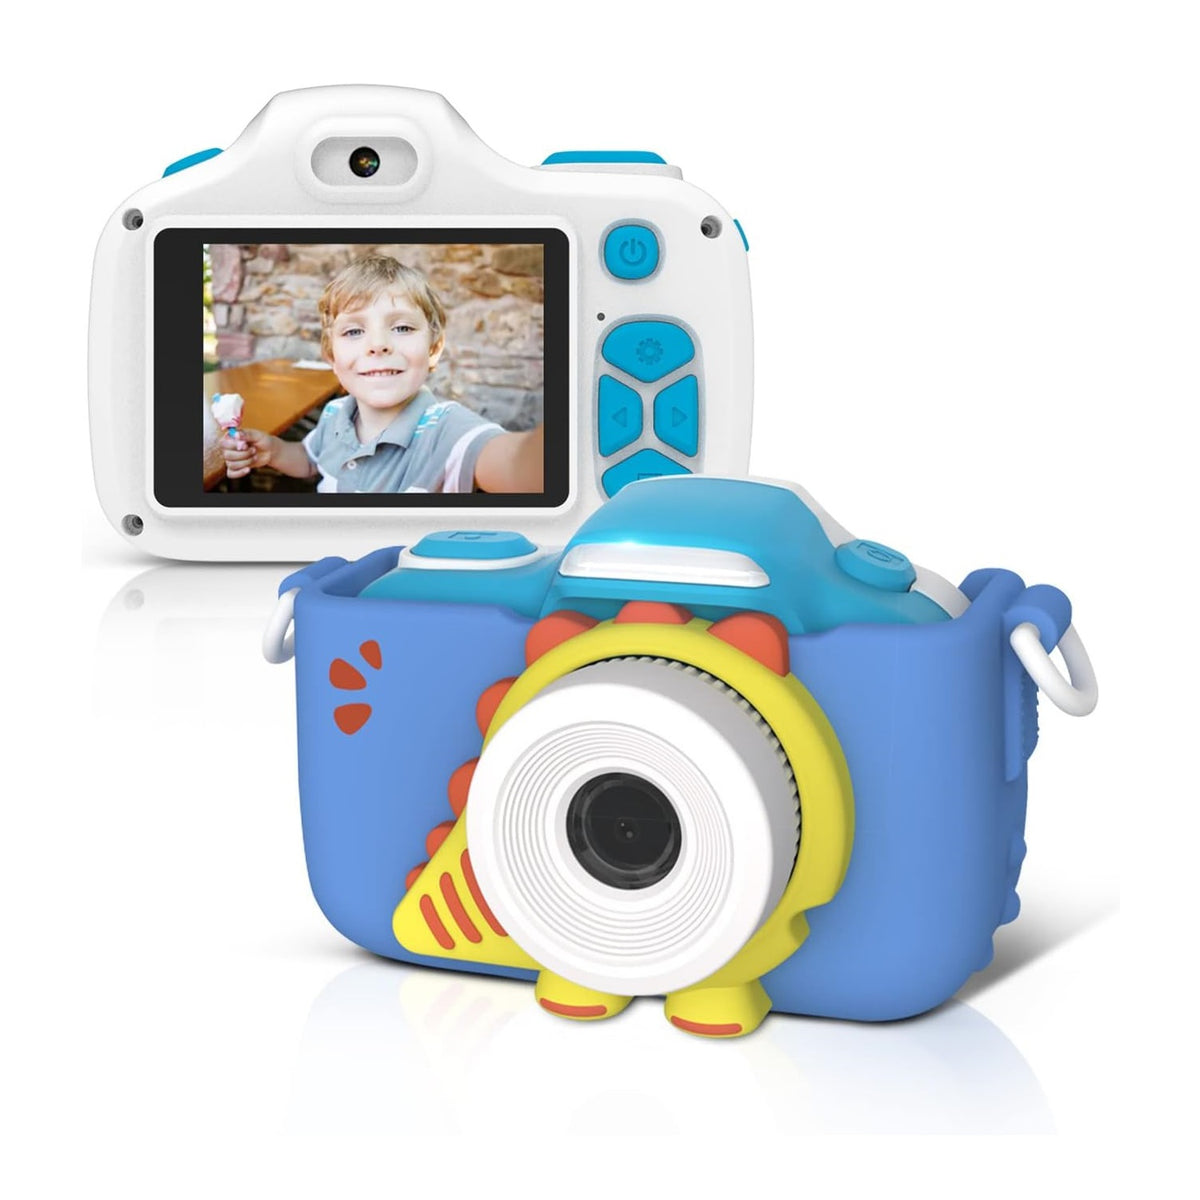 myFirst Camera 3 Selfie Lens Camera for Kids